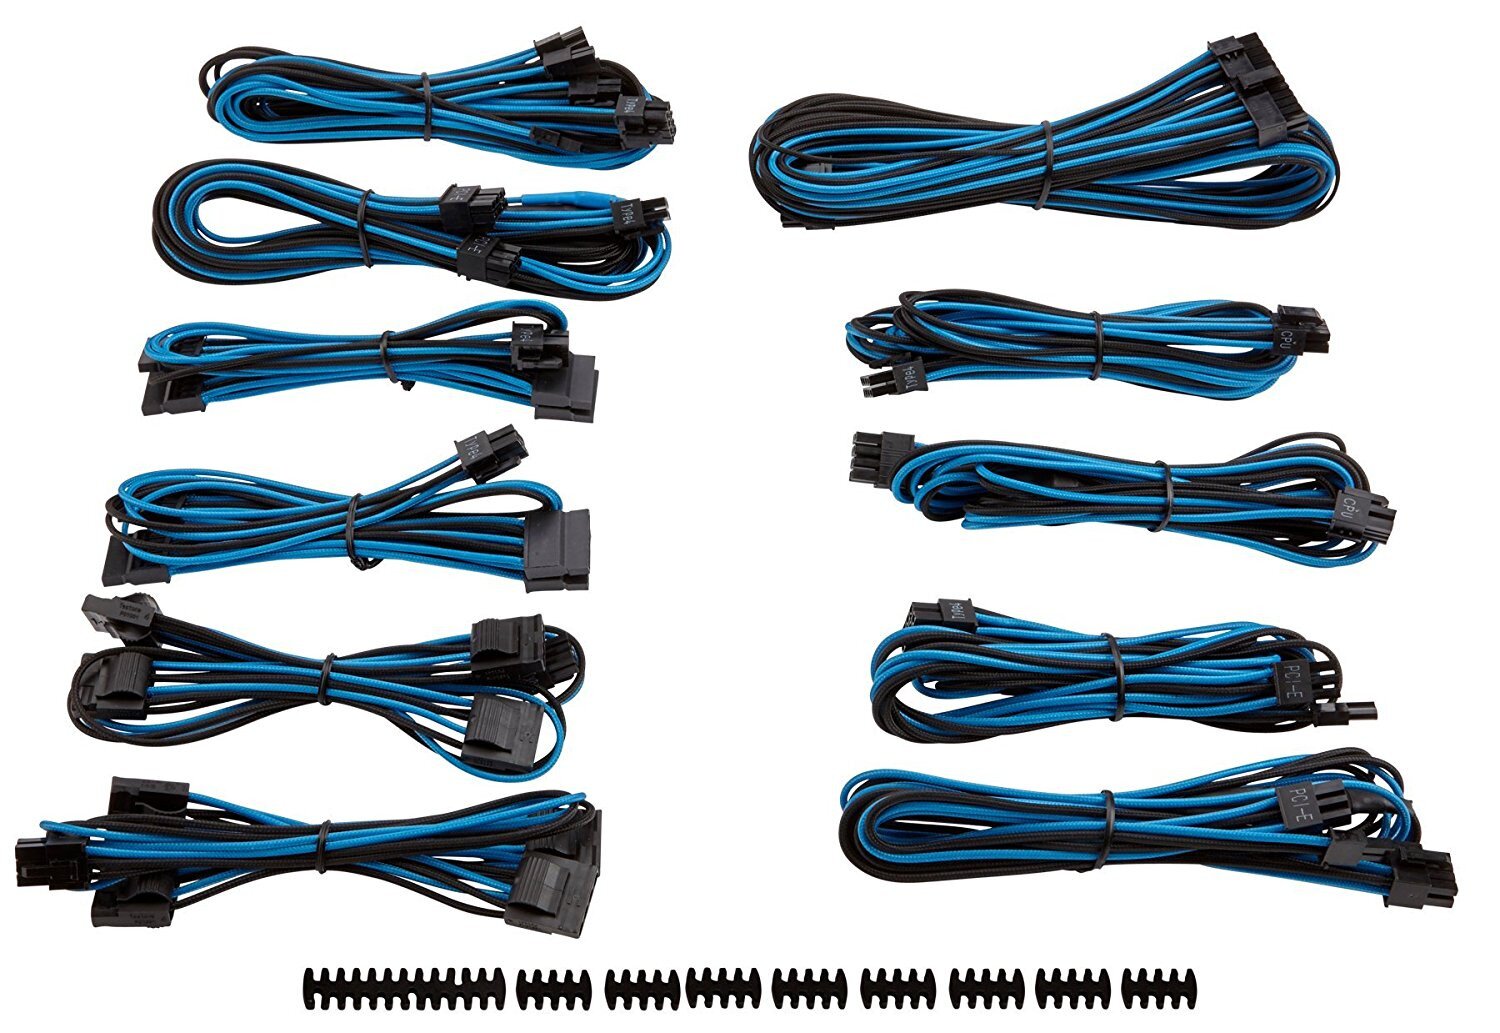 har taget fejl Modig Making Buy Corsair Premium Individually Sleeved PSU Cable Kit Pro Package, Type 4  (Generation 3) - Blue/Black online Worldwide - Tejar.com